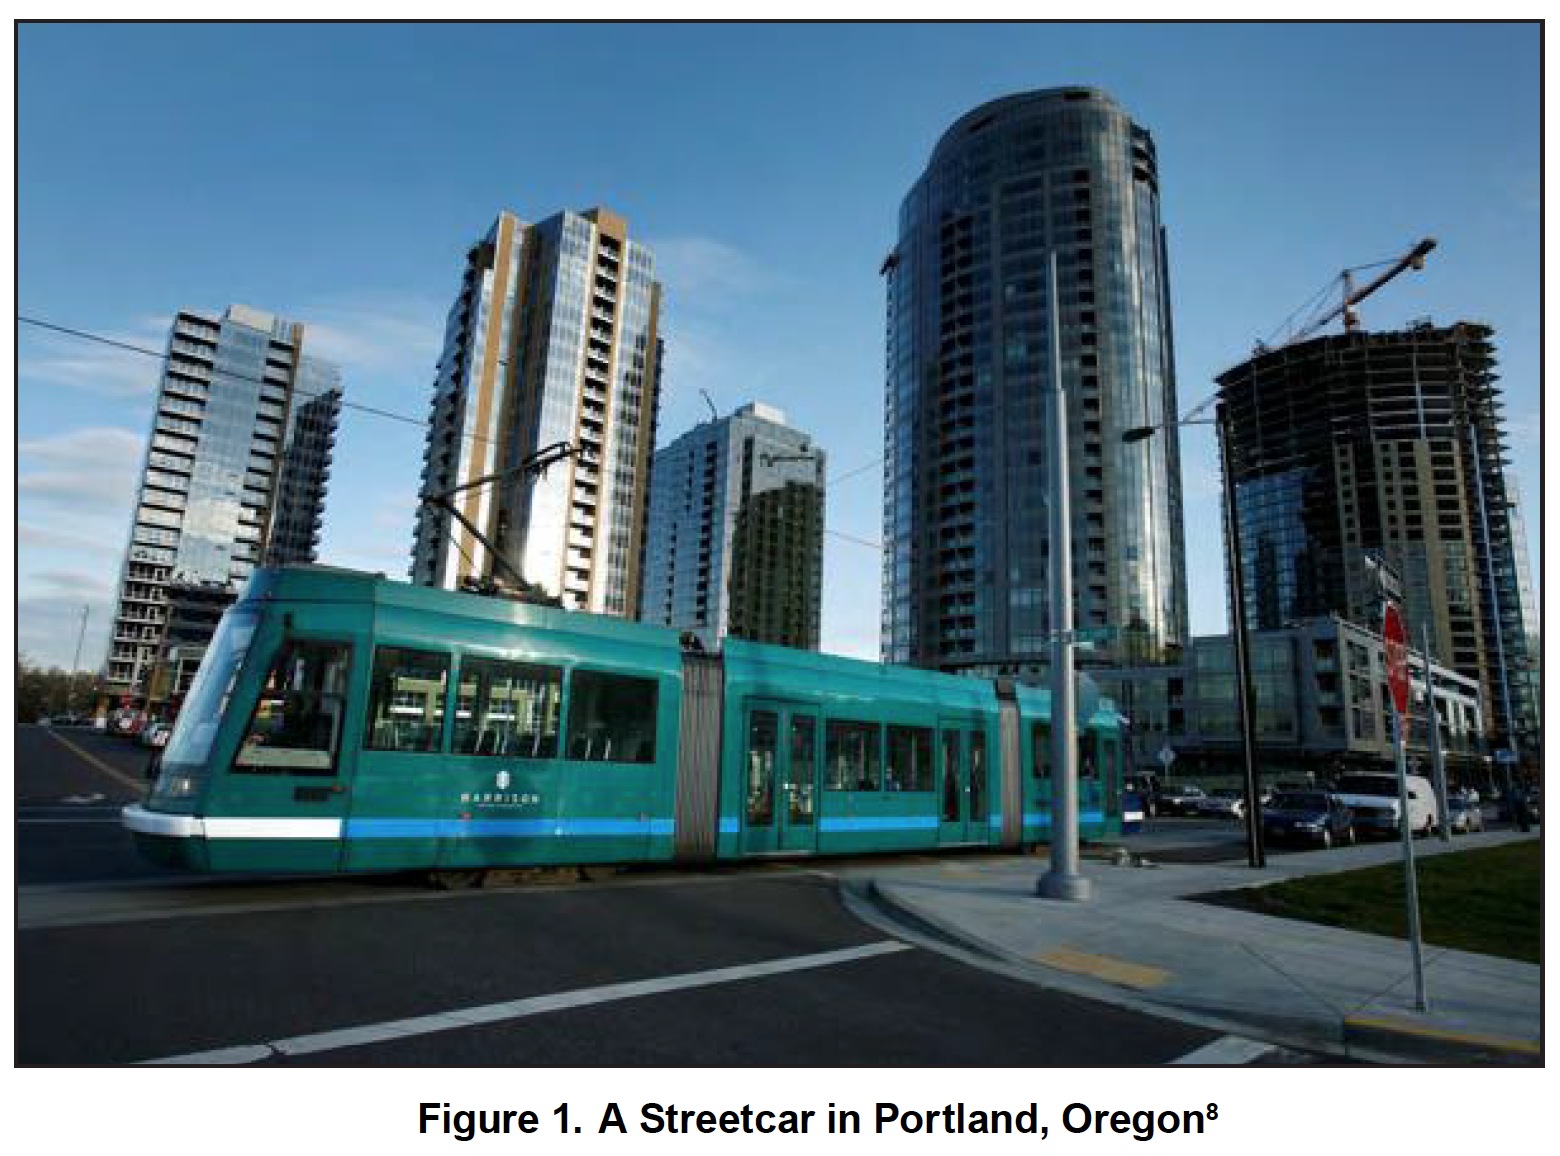 Figure 1: A Streetcar in Portland, Oregon